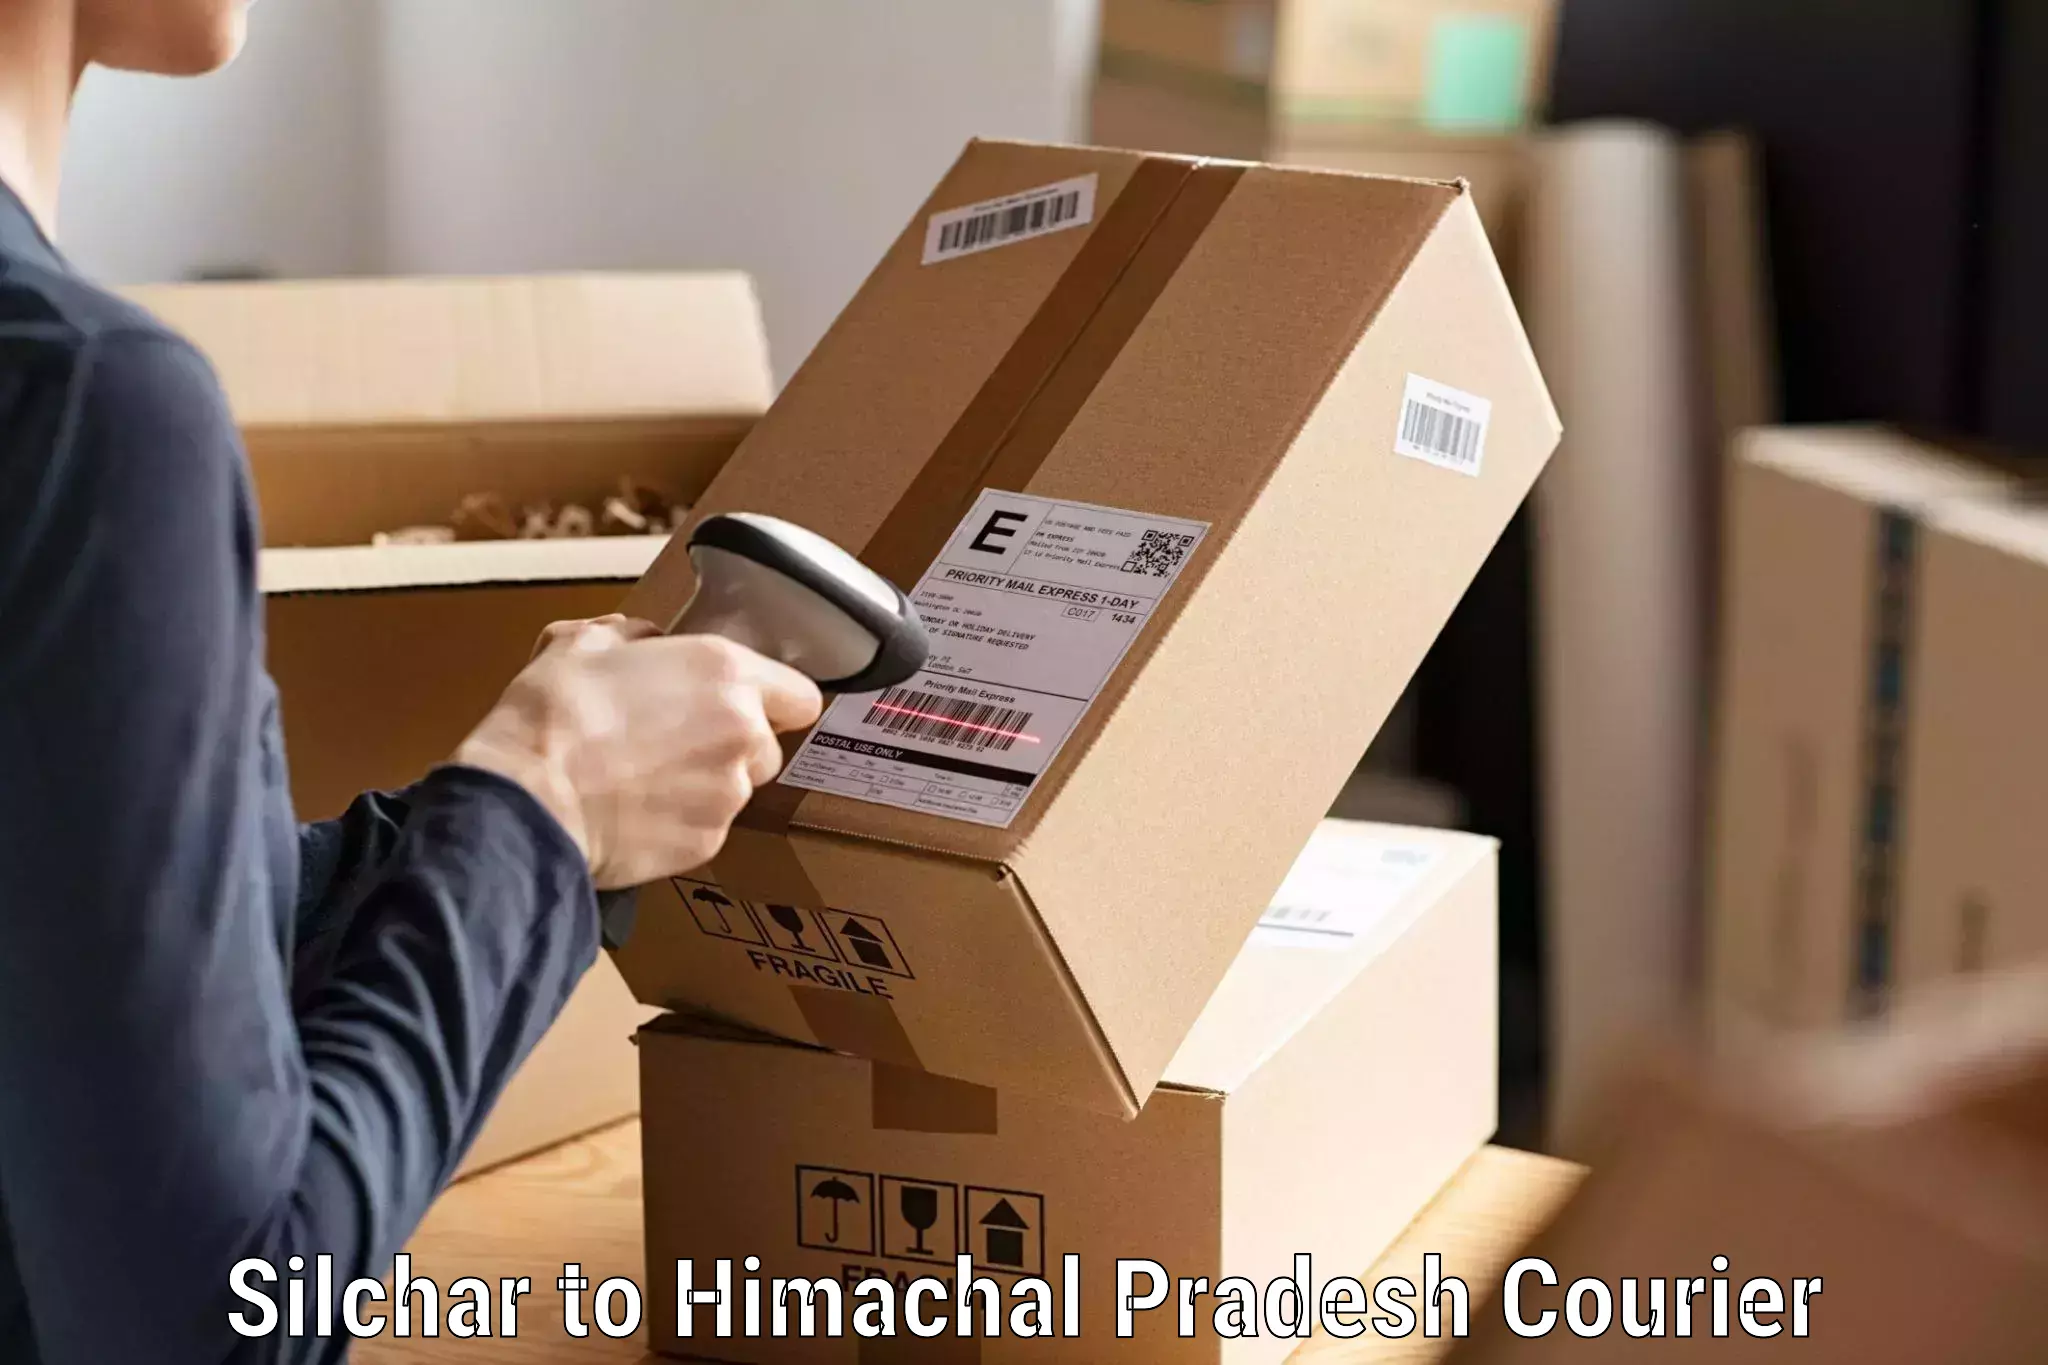 Express courier capabilities Silchar to Bilaspur Himachal Pradesh